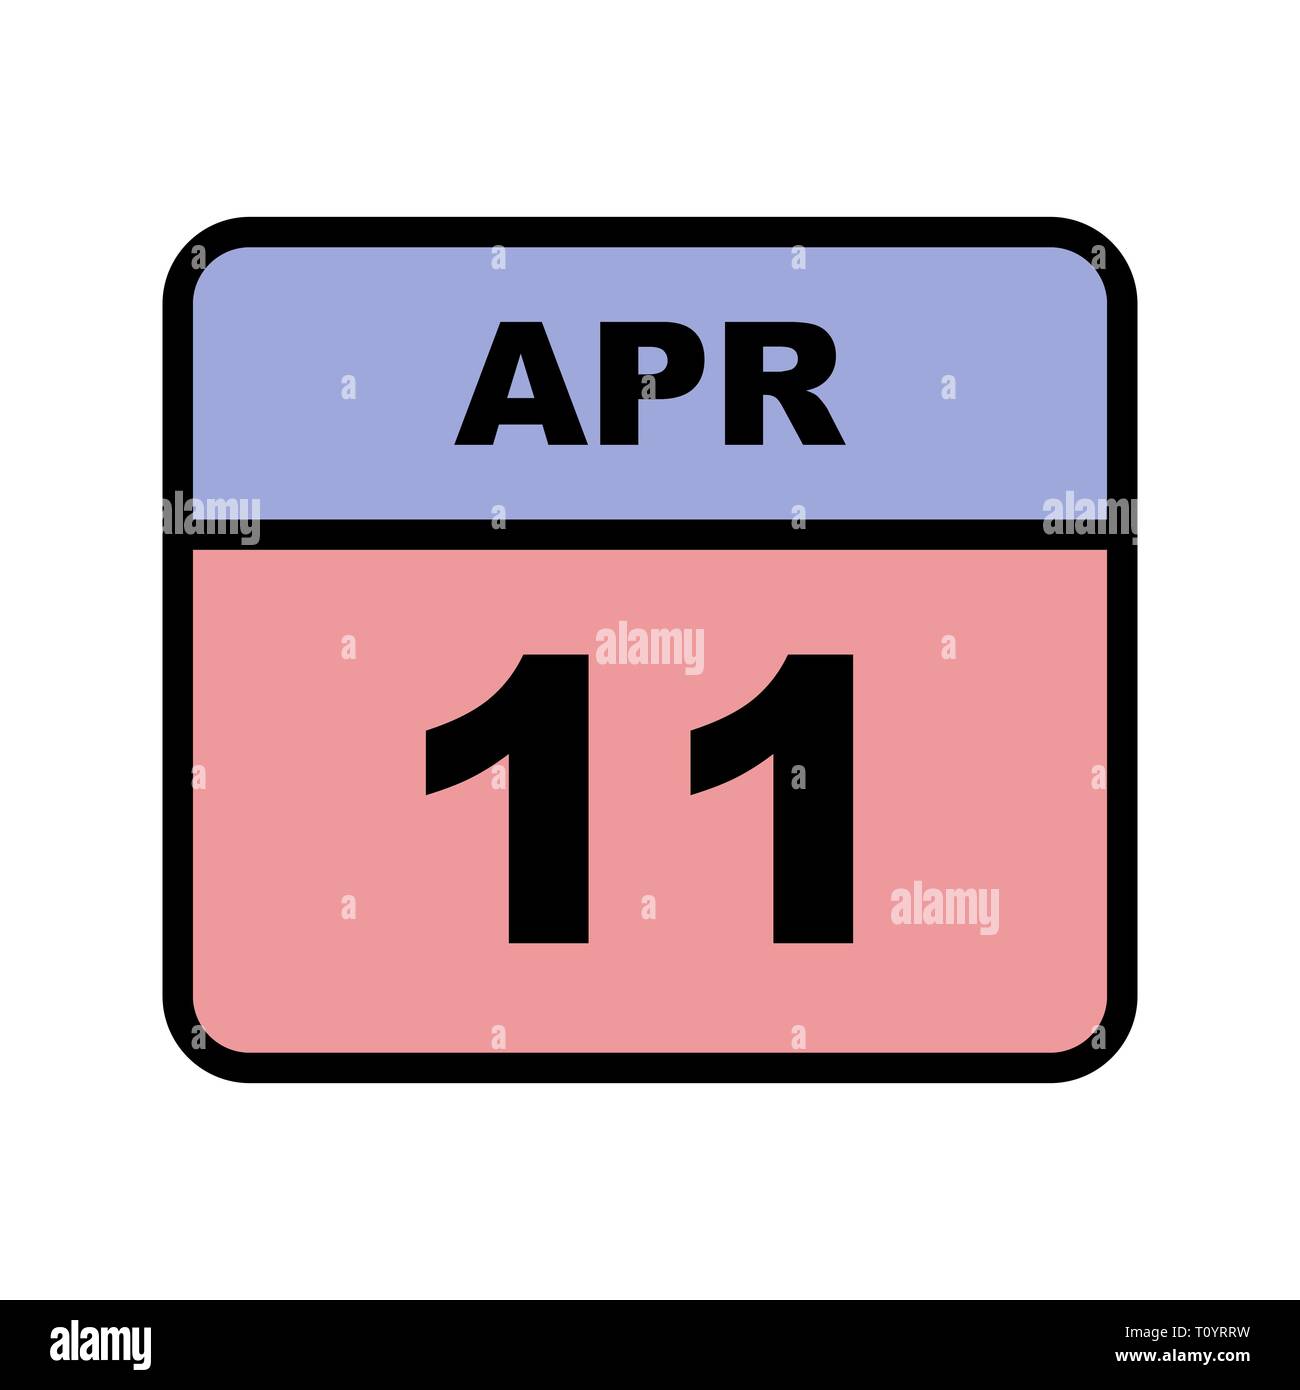 April 11th Date on a Single Day Calendar Stock Photo Alamy